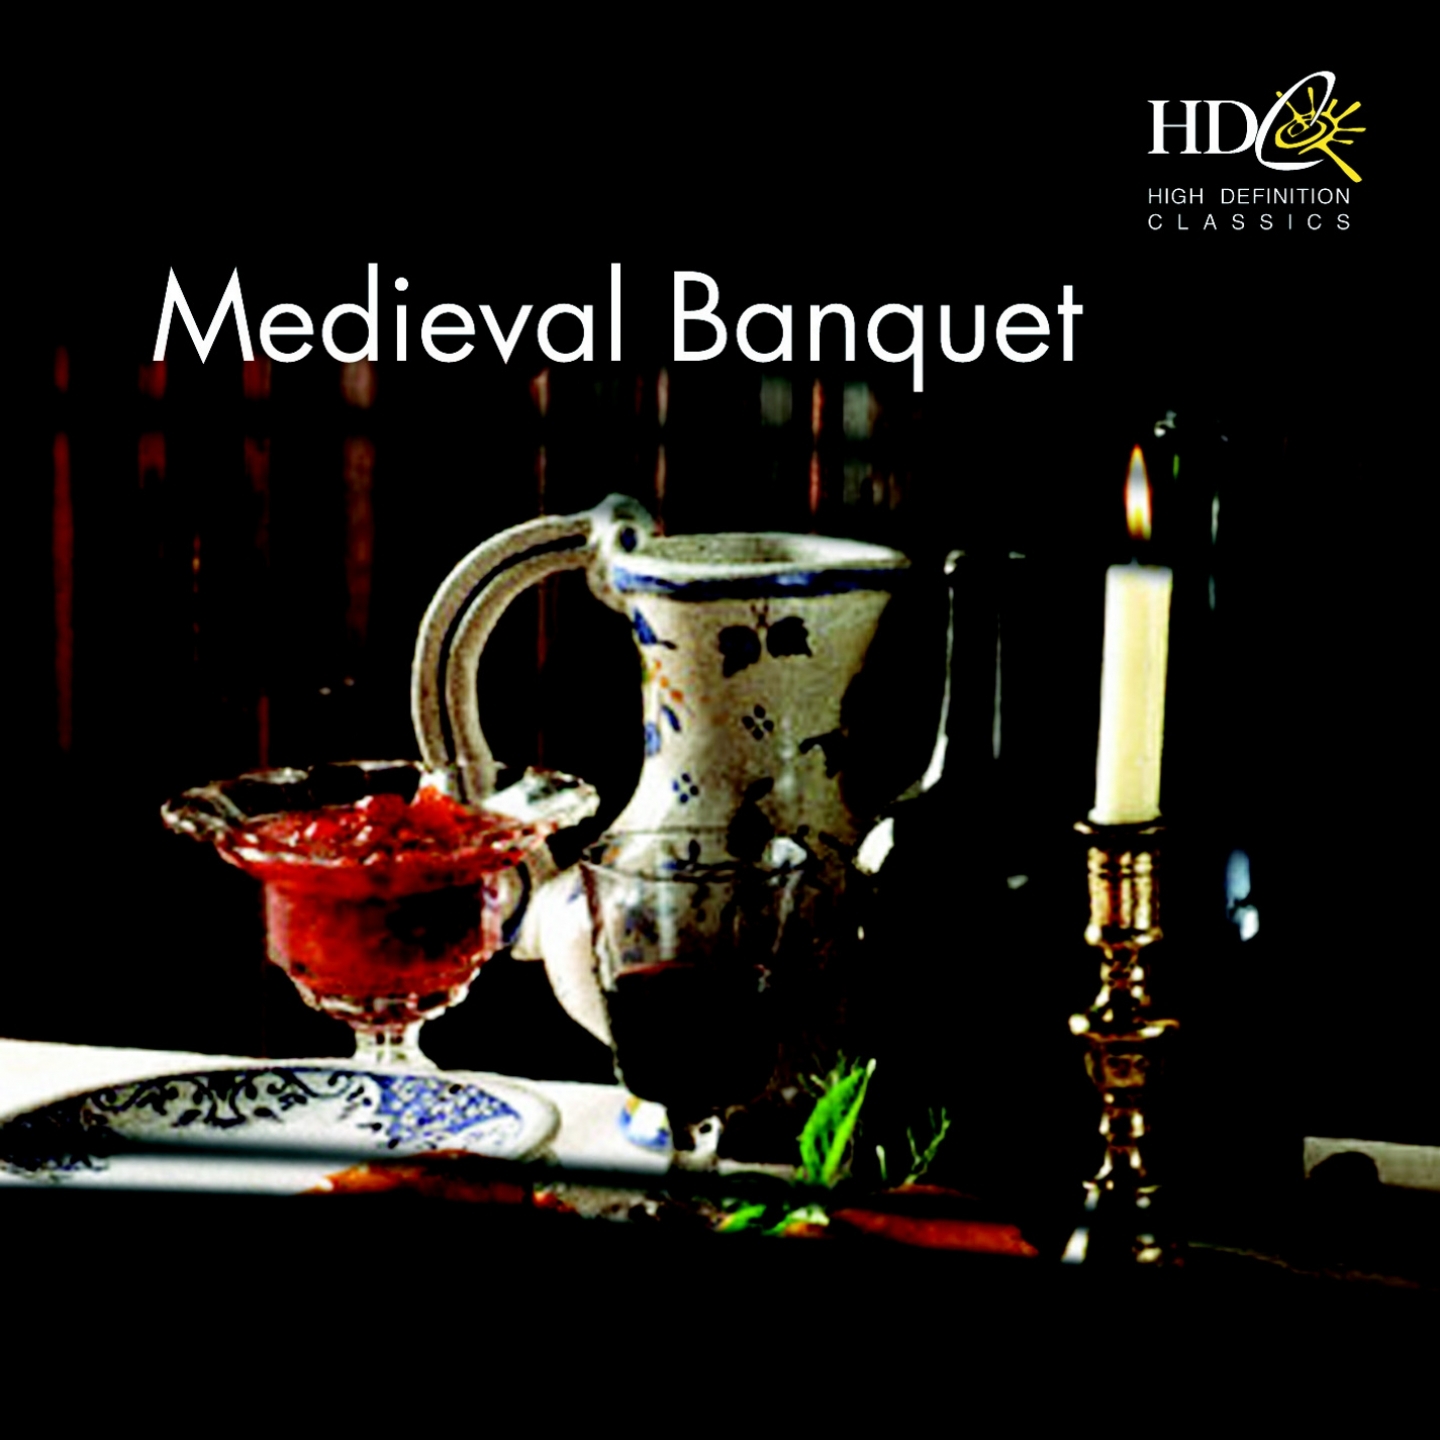 A Medieval banquet